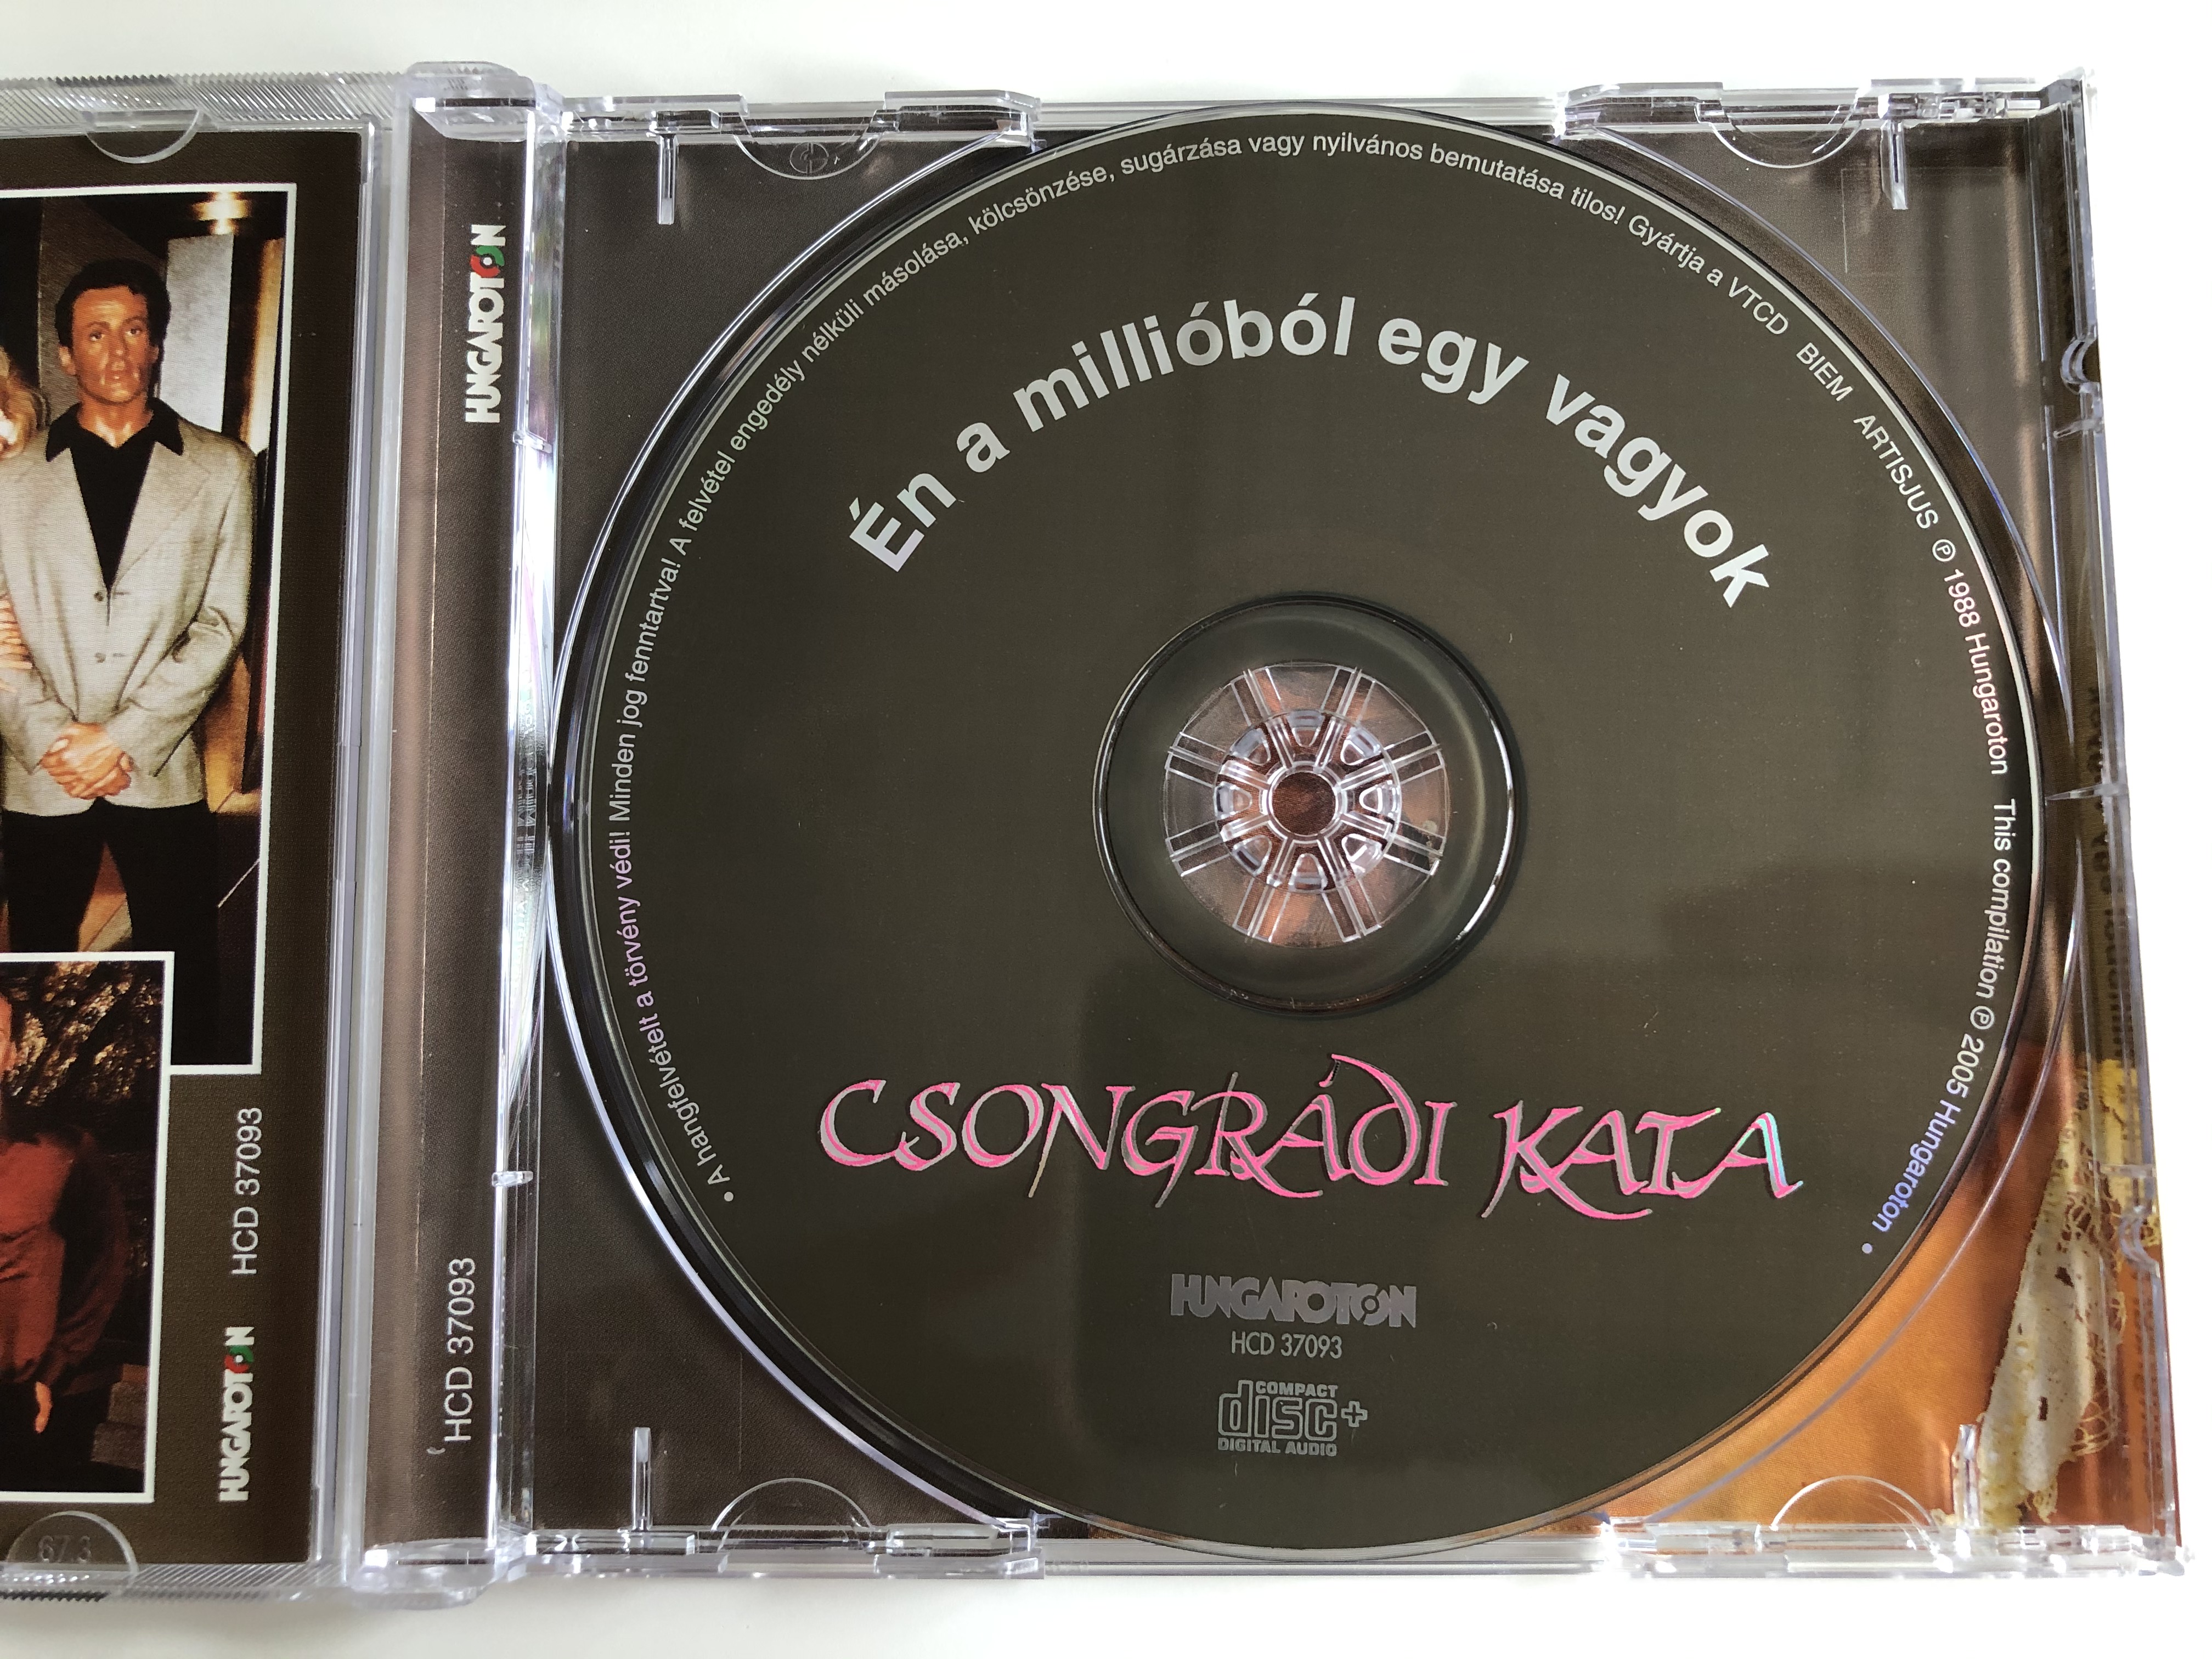 csongr-di-kata-n-a-milli-b-l-egy-vagyok-hungaroton-audio-cd-2005-hcd-37093-5-.jpg